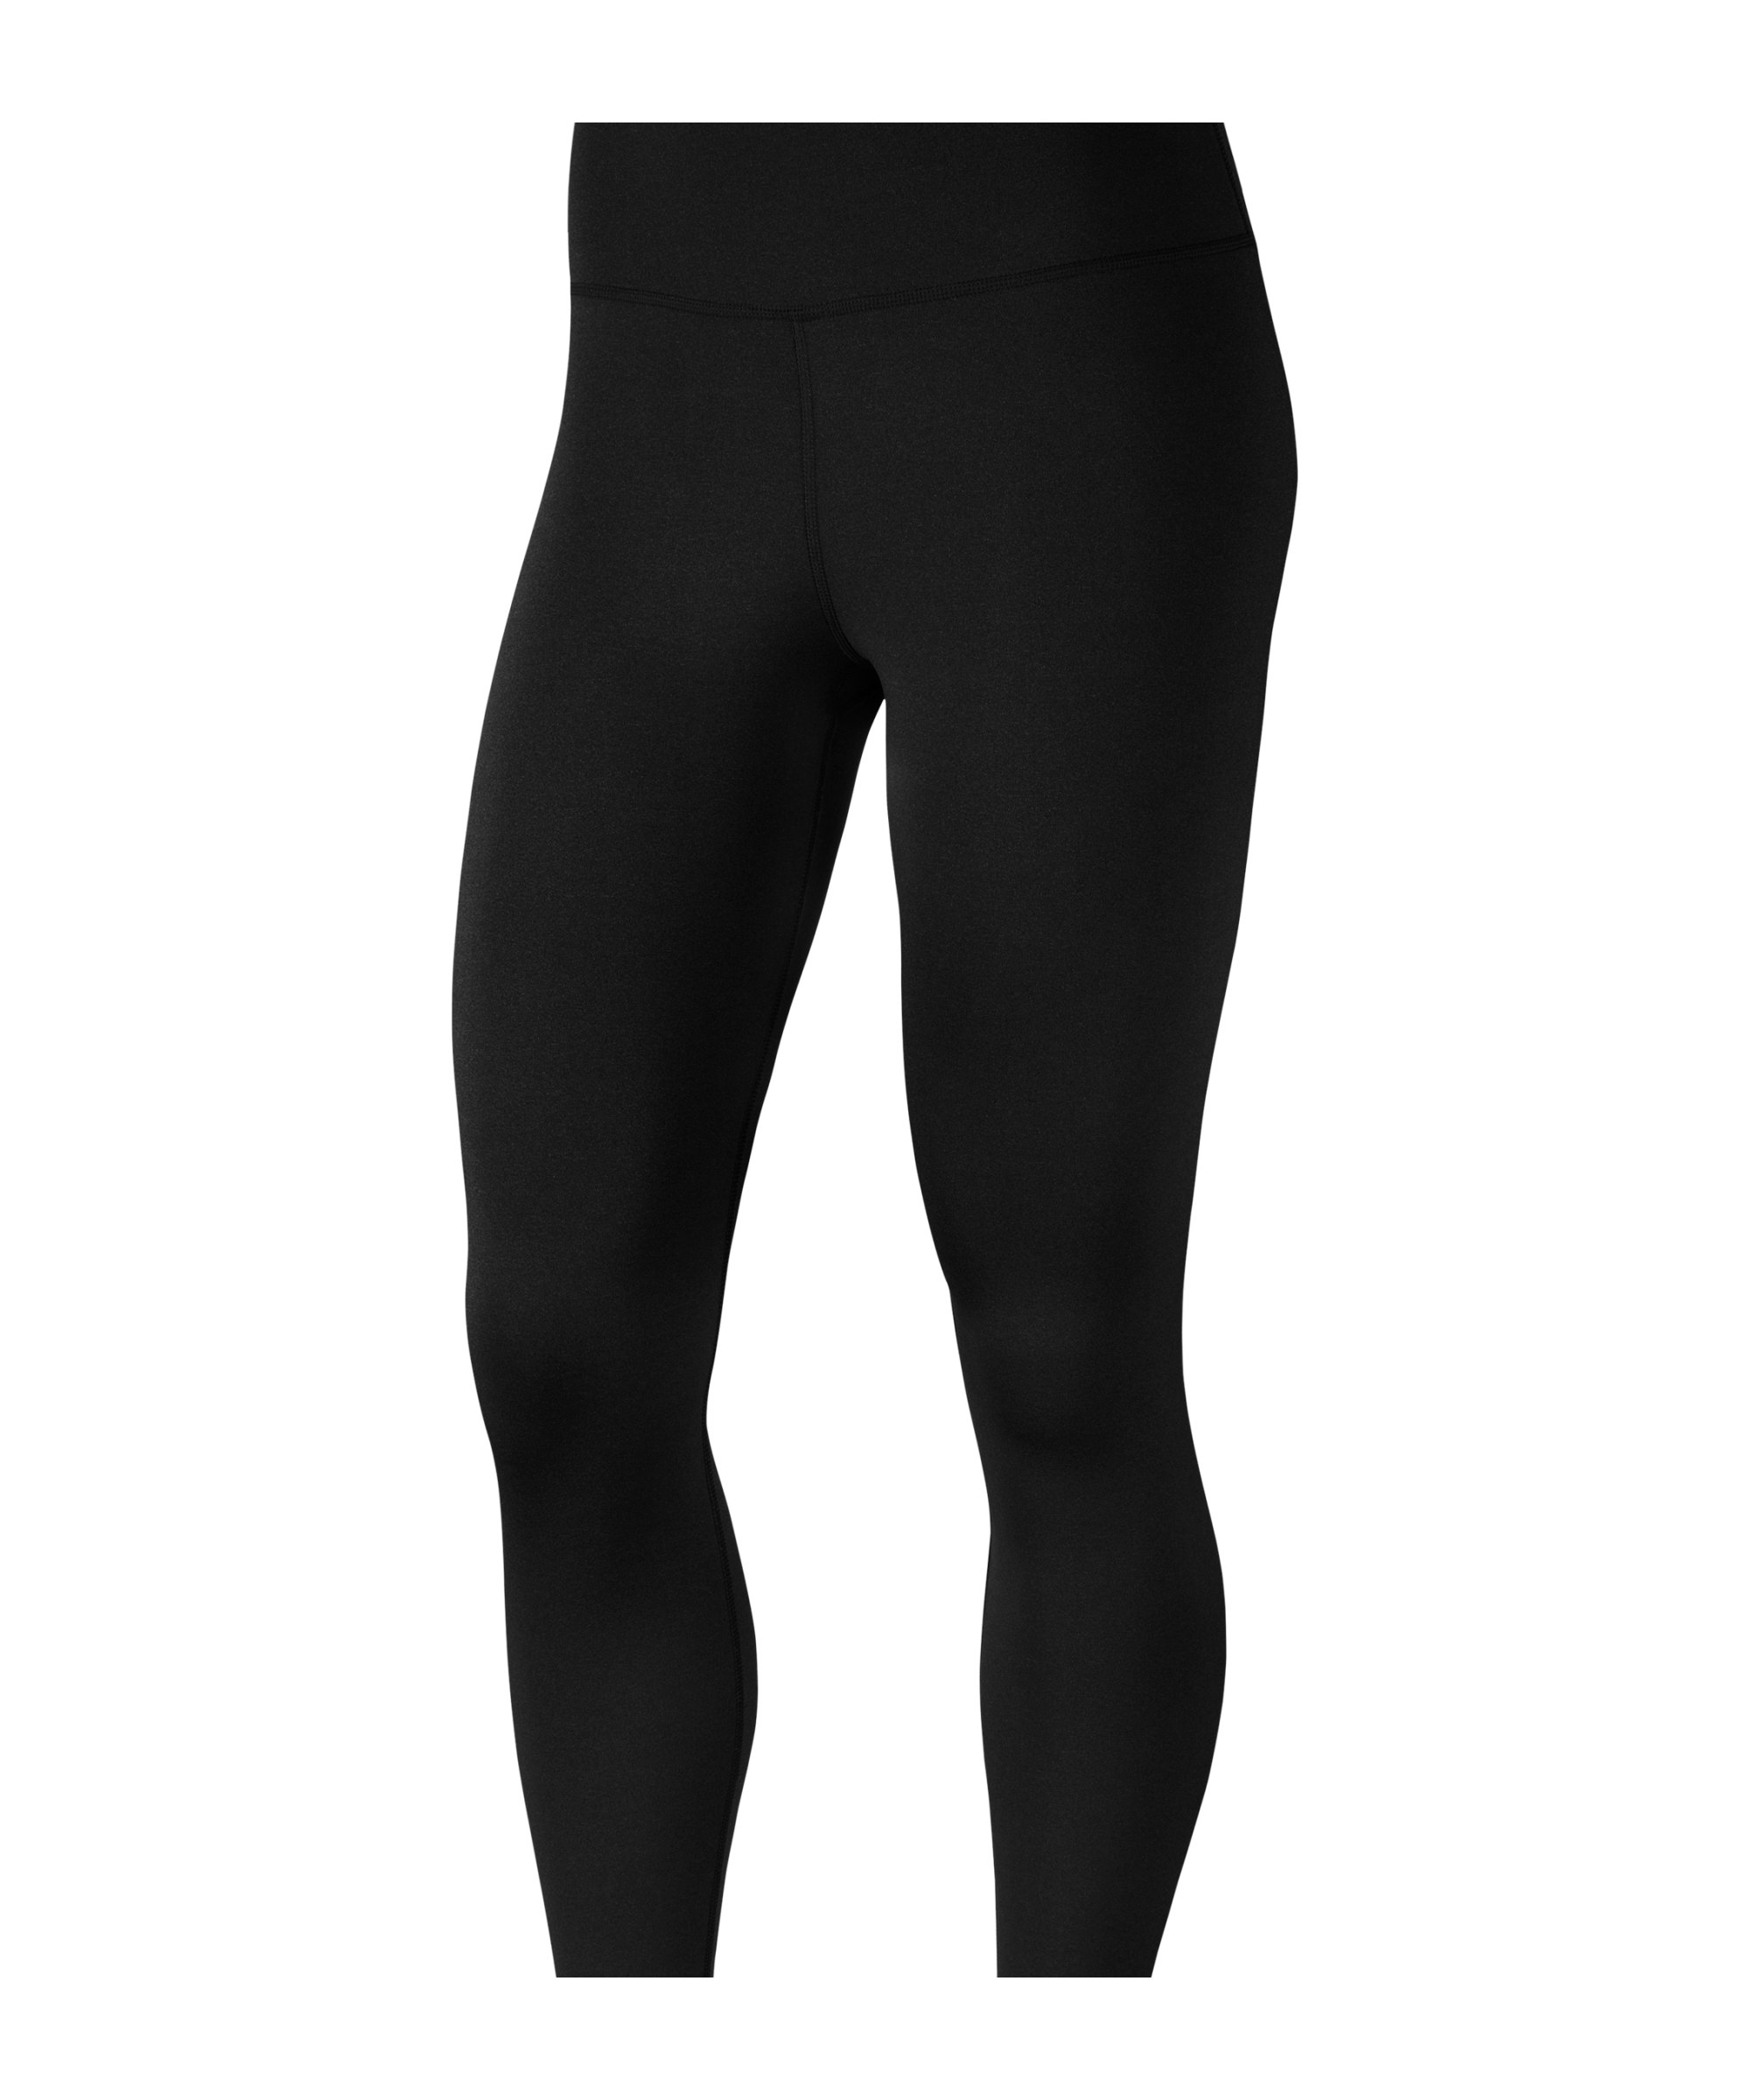 Nike Yoga 7/8 Leggings Training Damen Schwarz F010 - schwarz